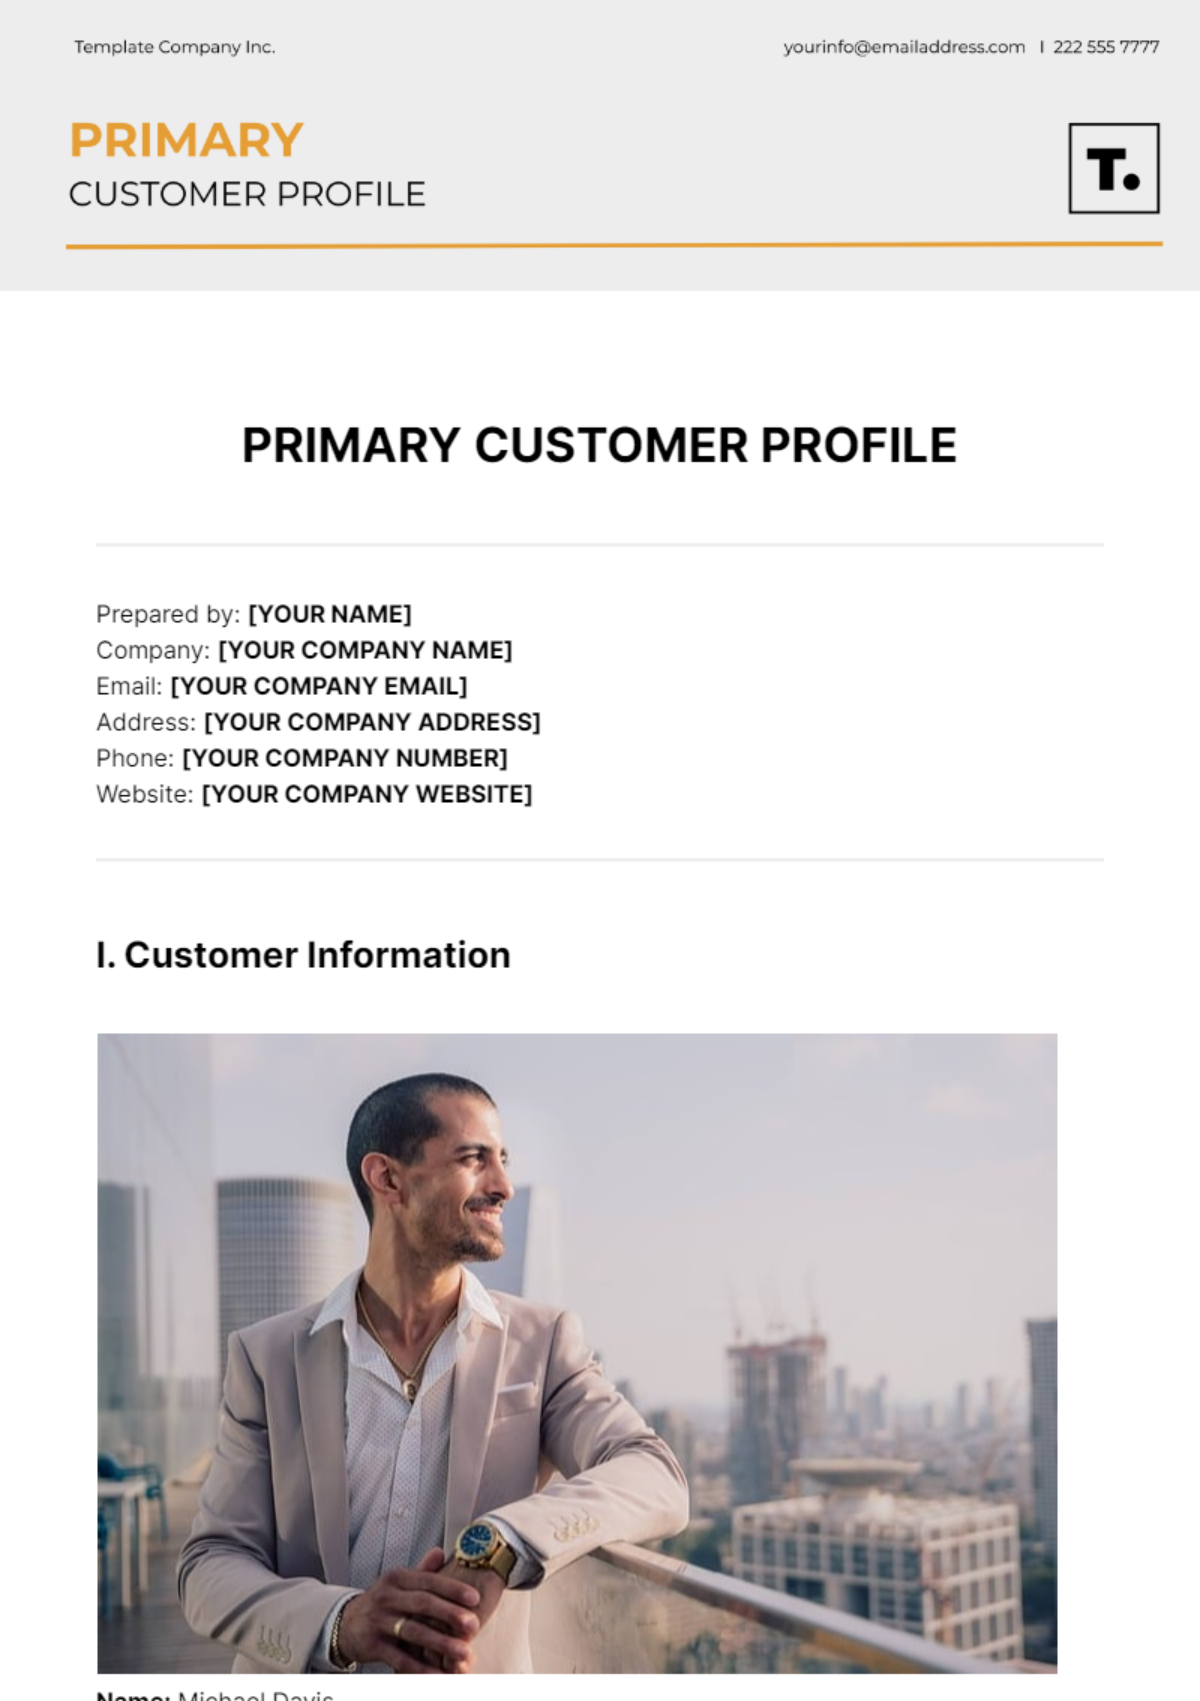 Primary Customer Profile Template